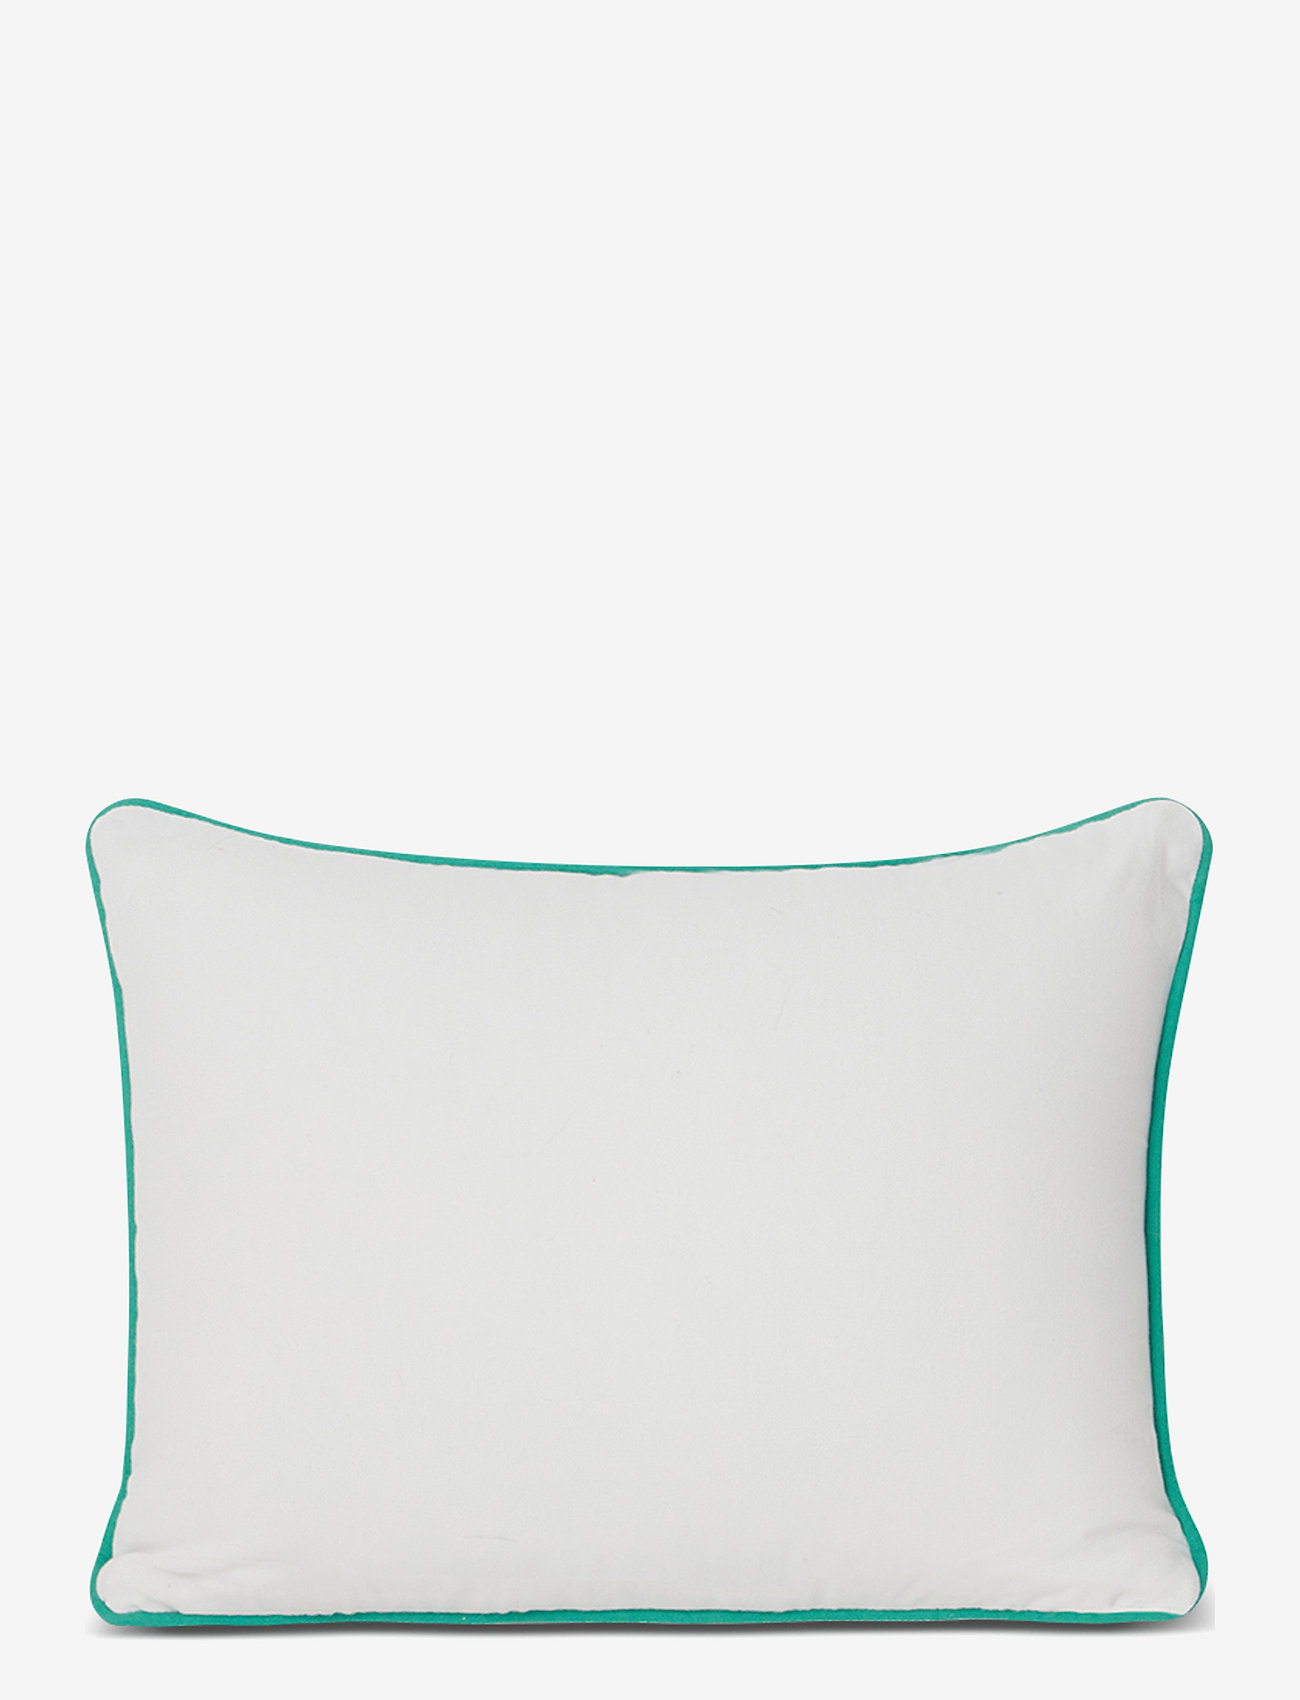 Lexington Home - Beach Club Small Embroidered Organic Cotton Pillow - kussenhoezen - white/blue/green - 1